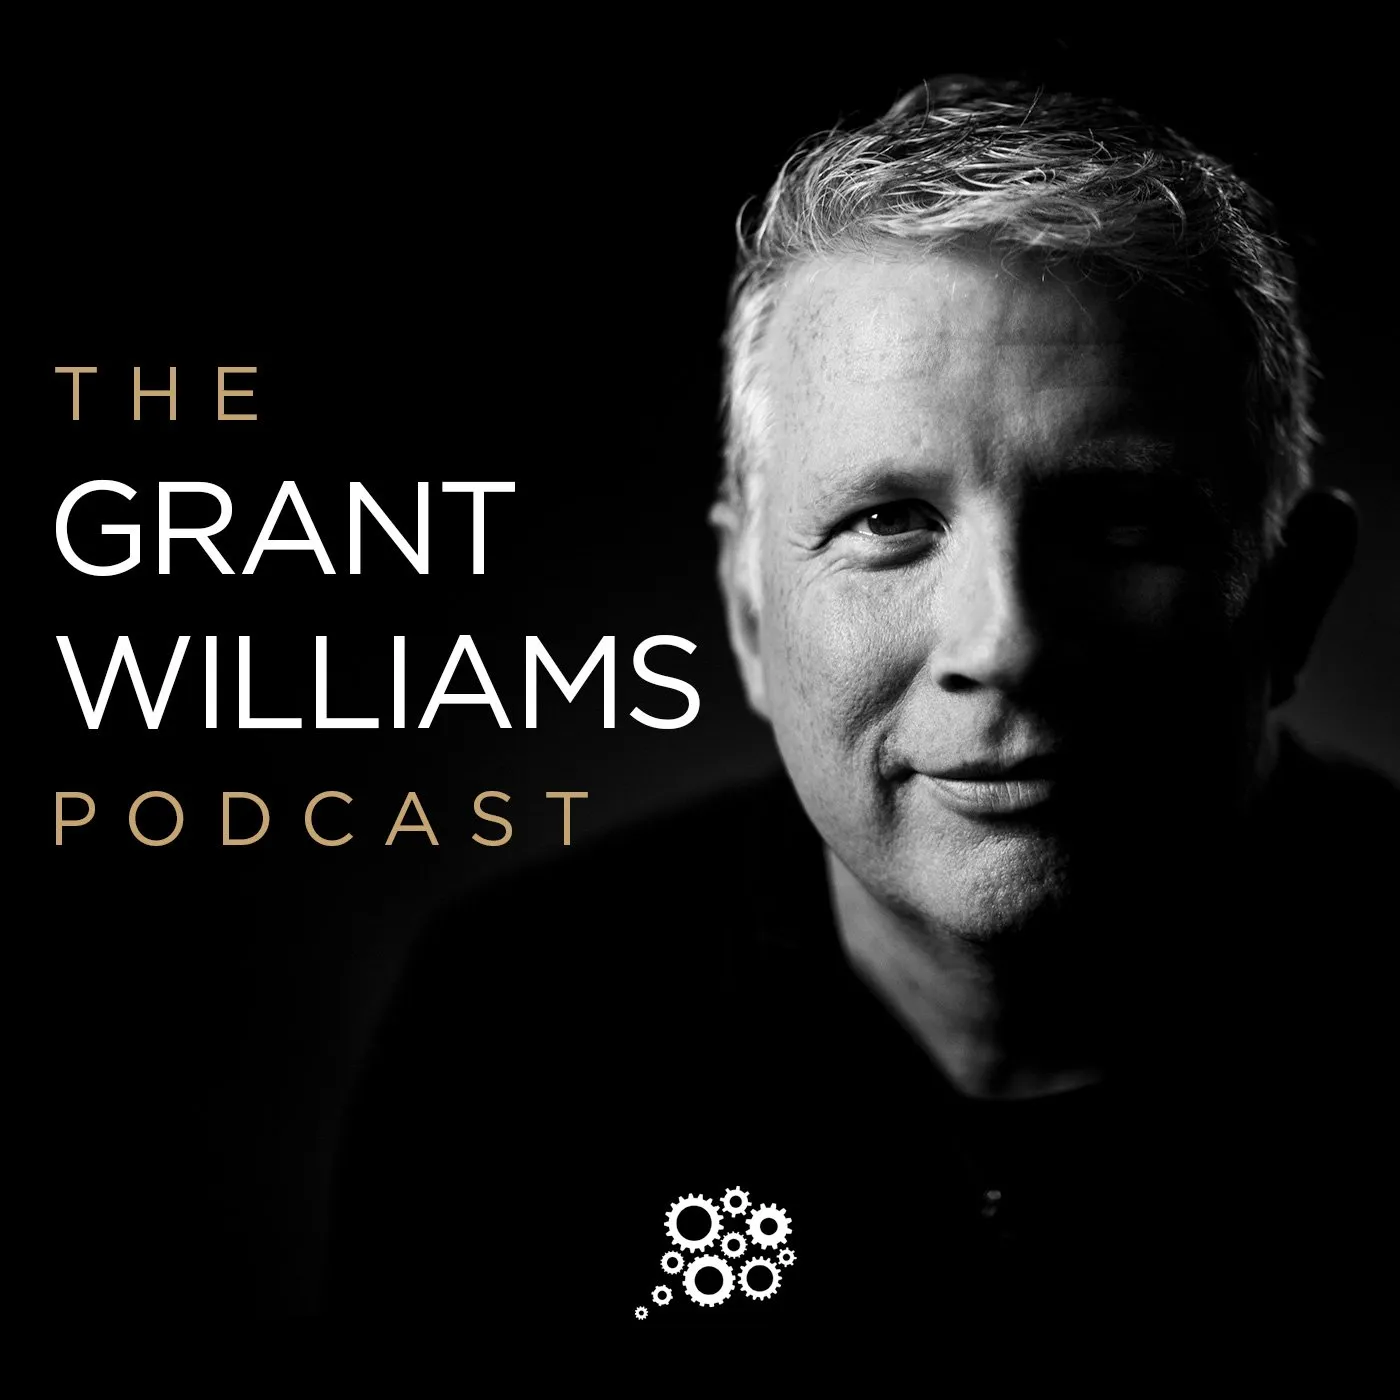 www.grant-williams.com